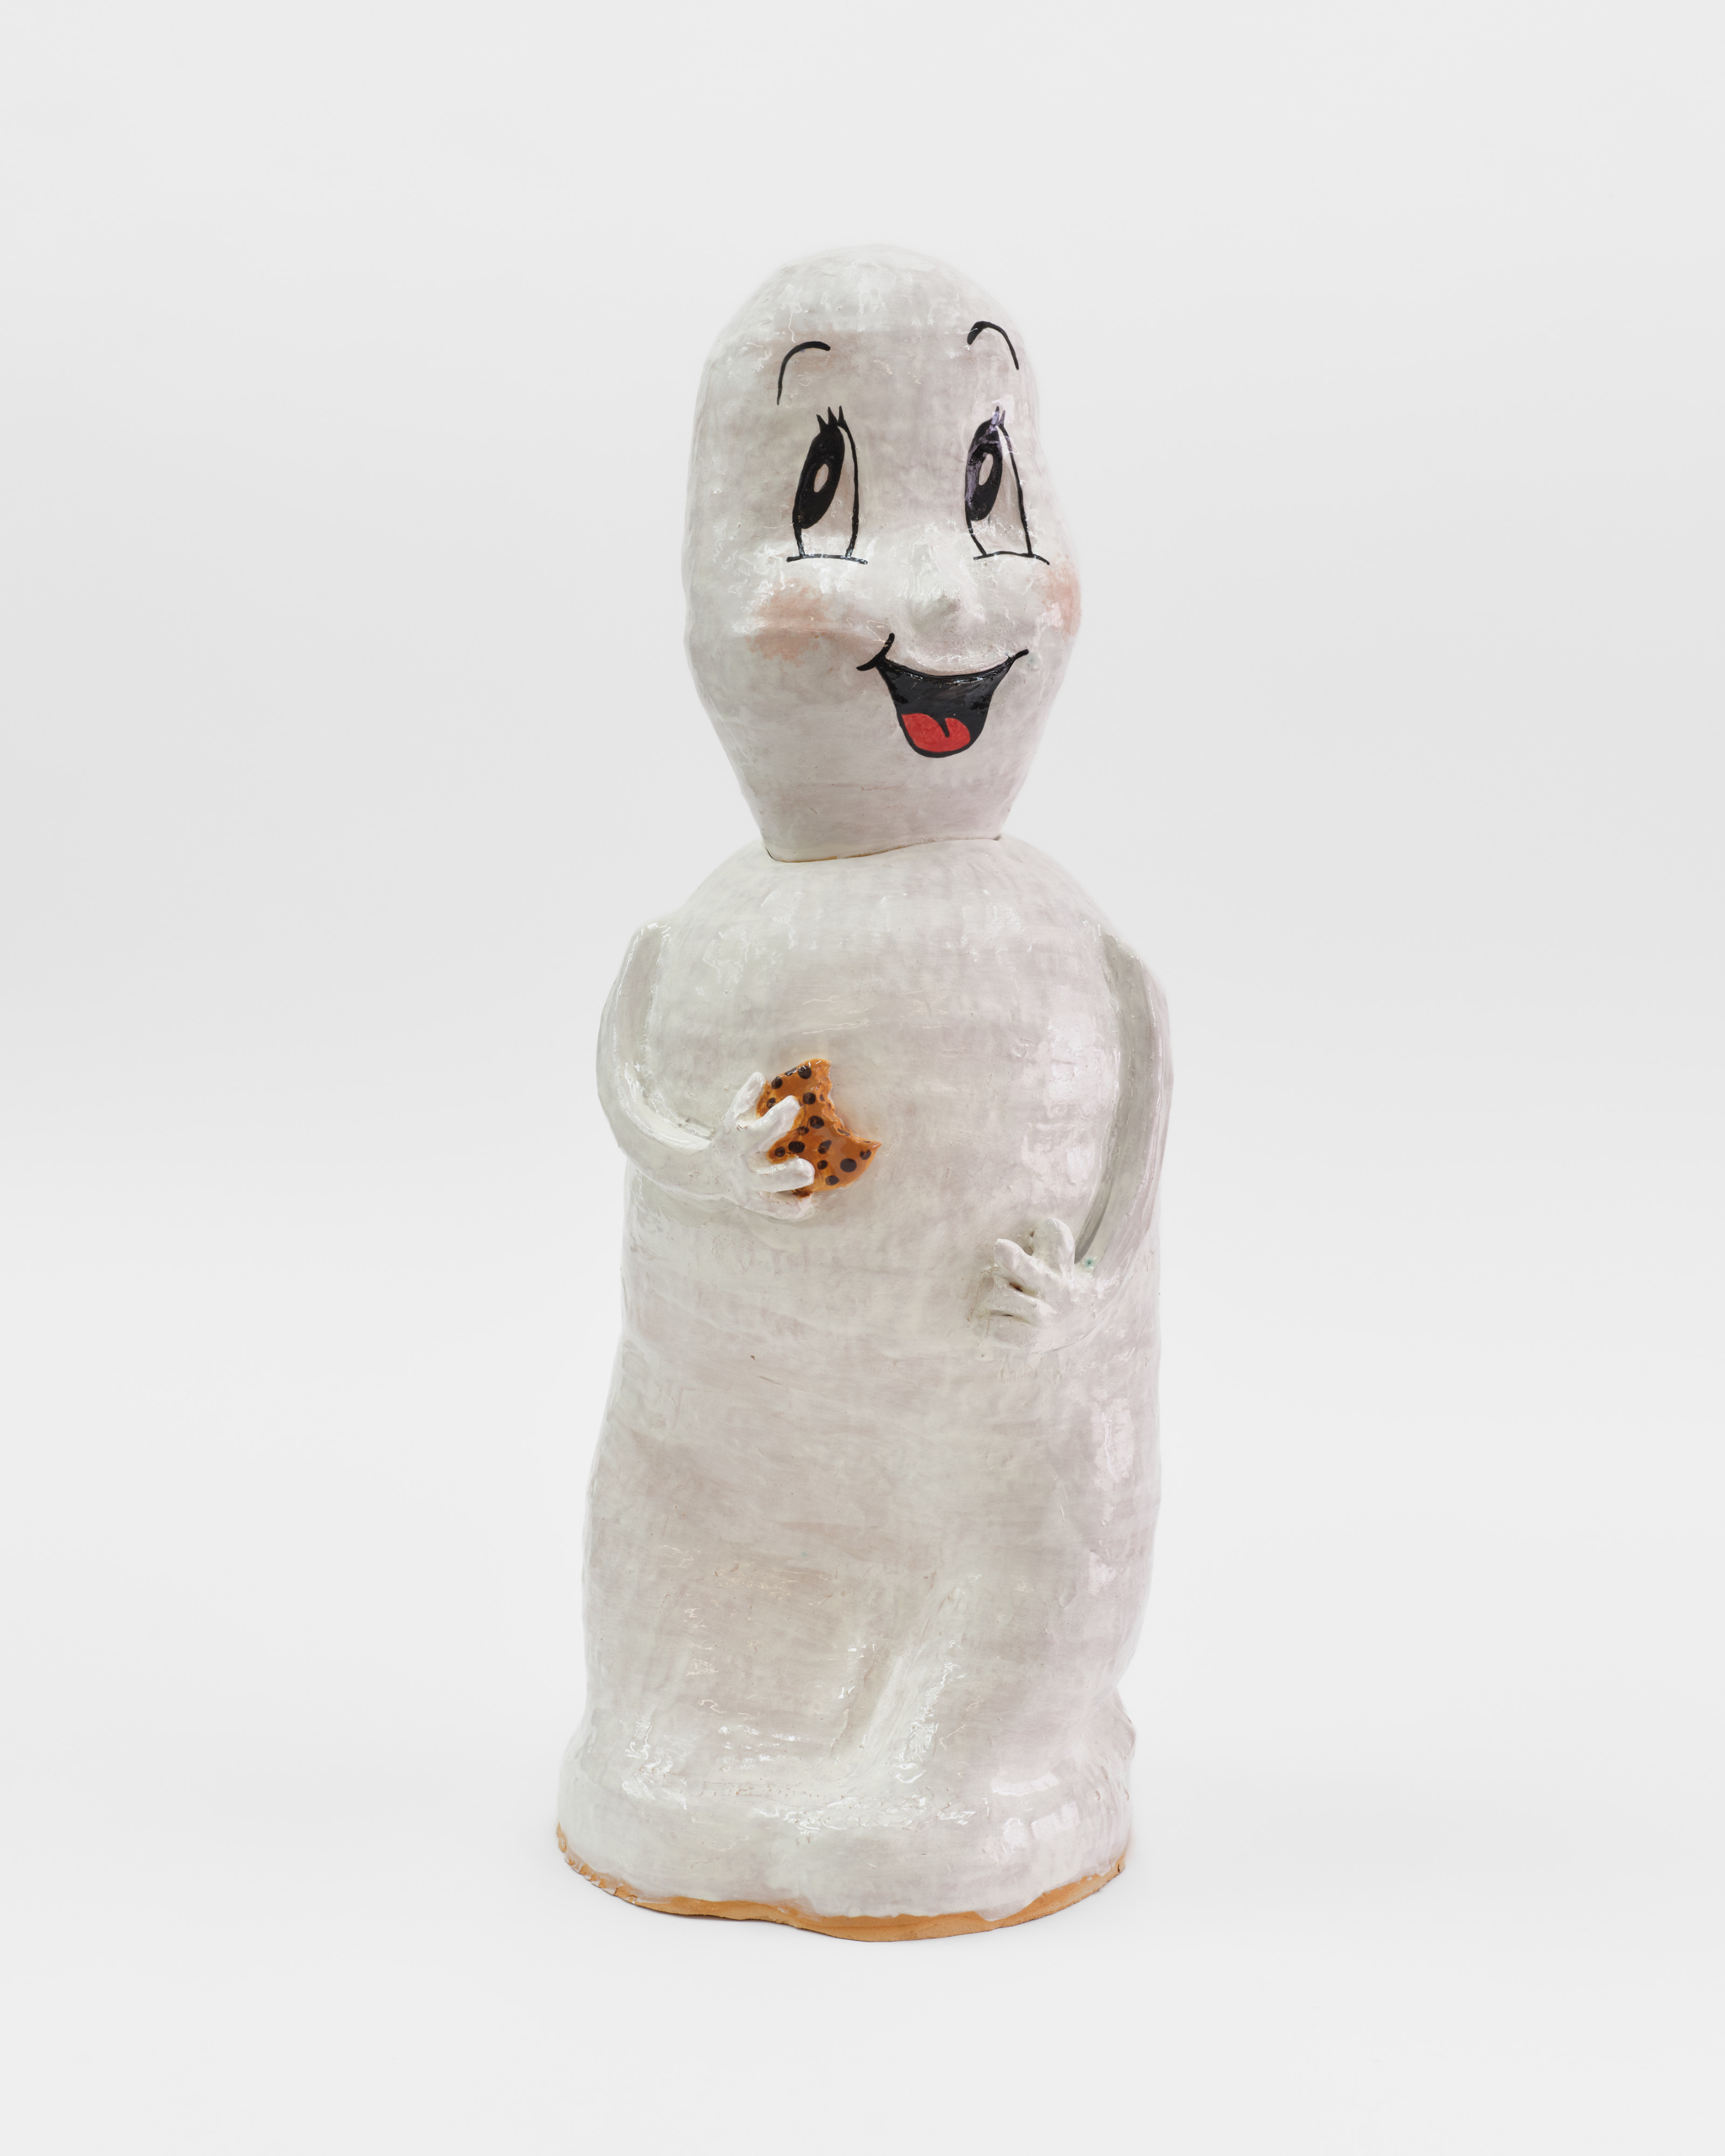 A ceramic sculpture of Casper the friendly ghost holding a chocolate chip cookie. 